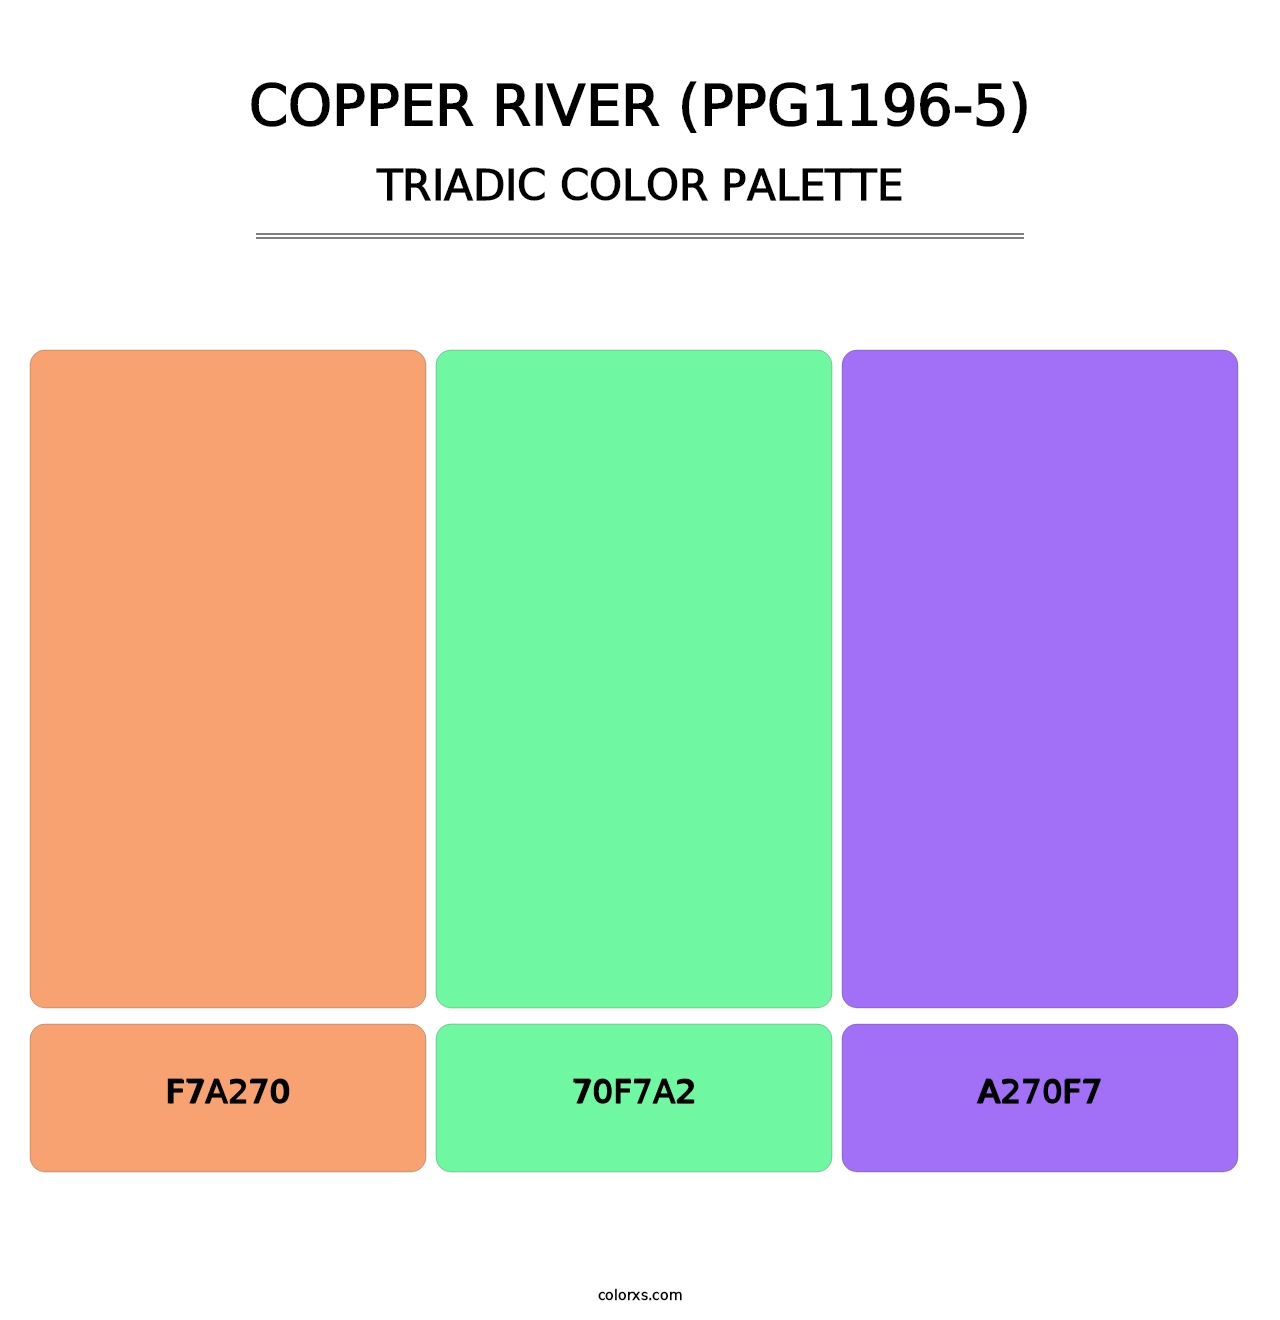 Copper River (PPG1196-5) - Triadic Color Palette